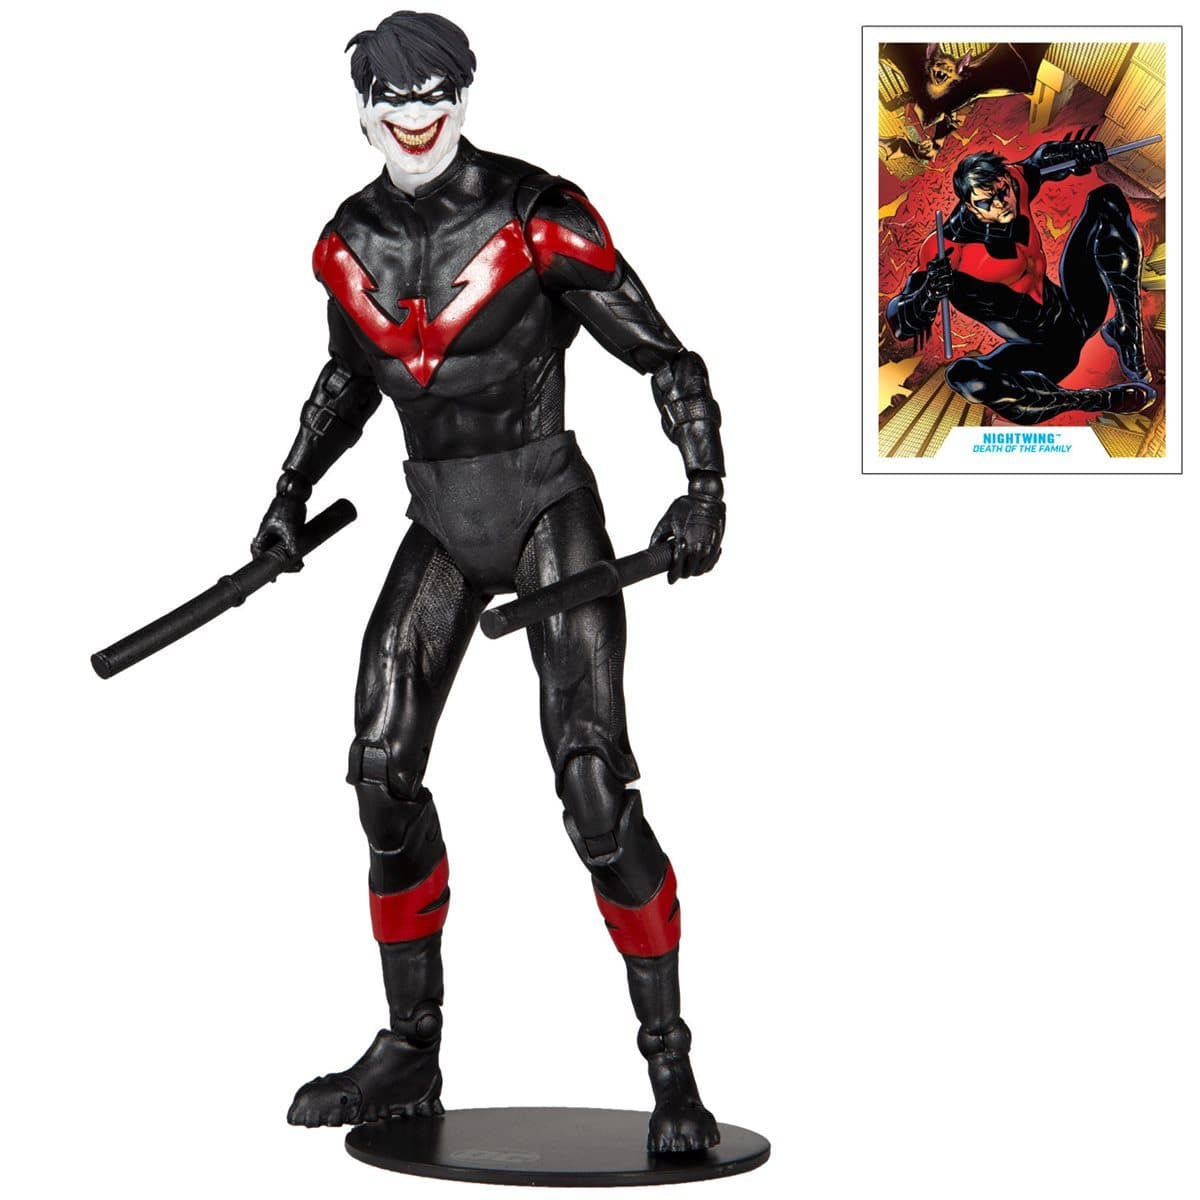 DC Multiverse Nightwing Joker 7-Inch Action Figure - Pop-O-Loco - McFarlane